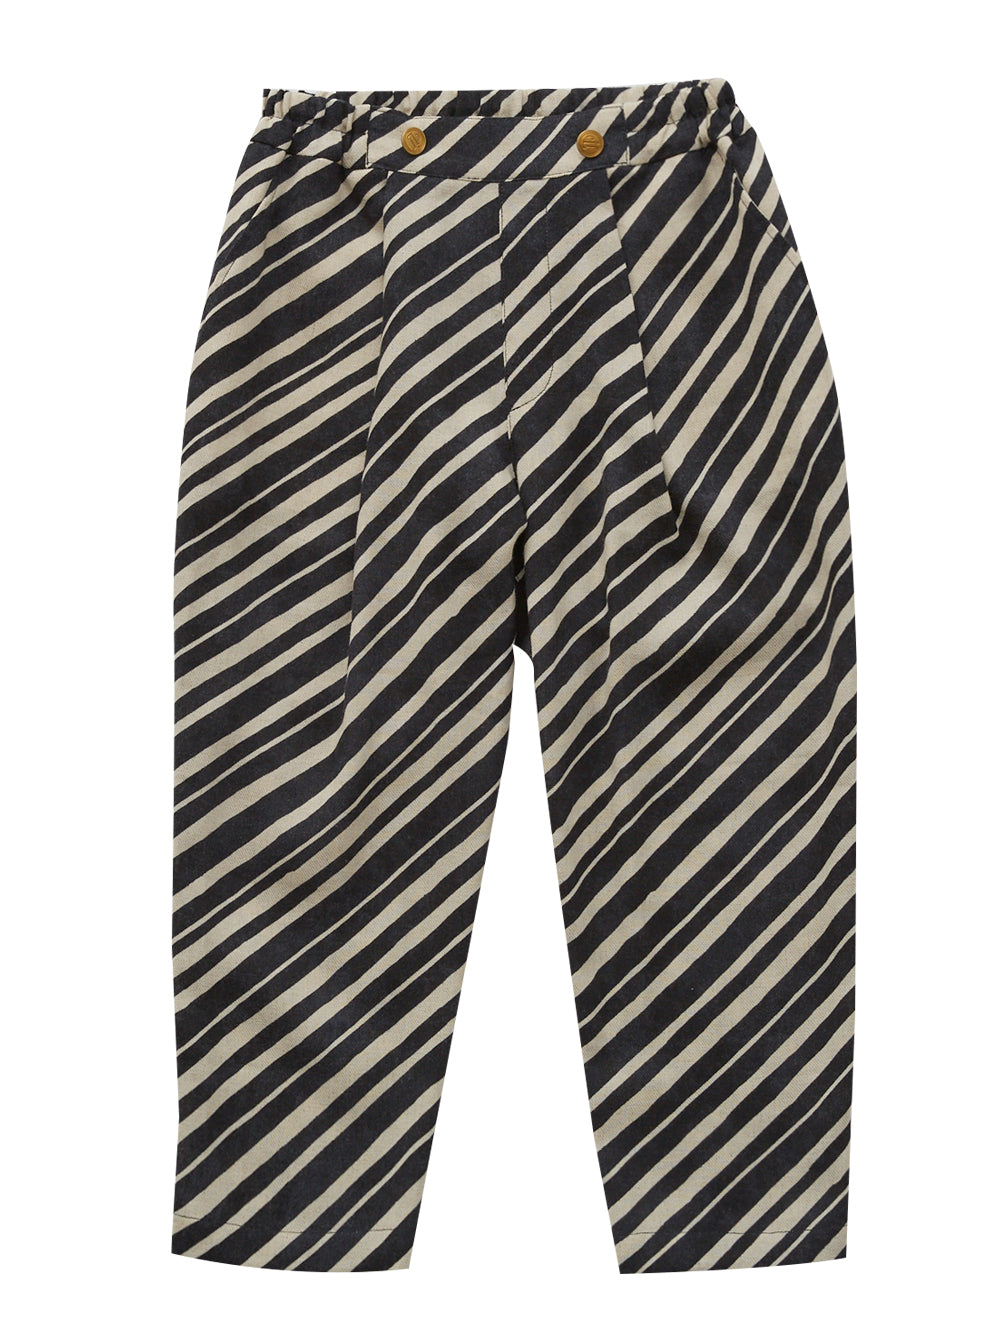 Angled Stripe Pants